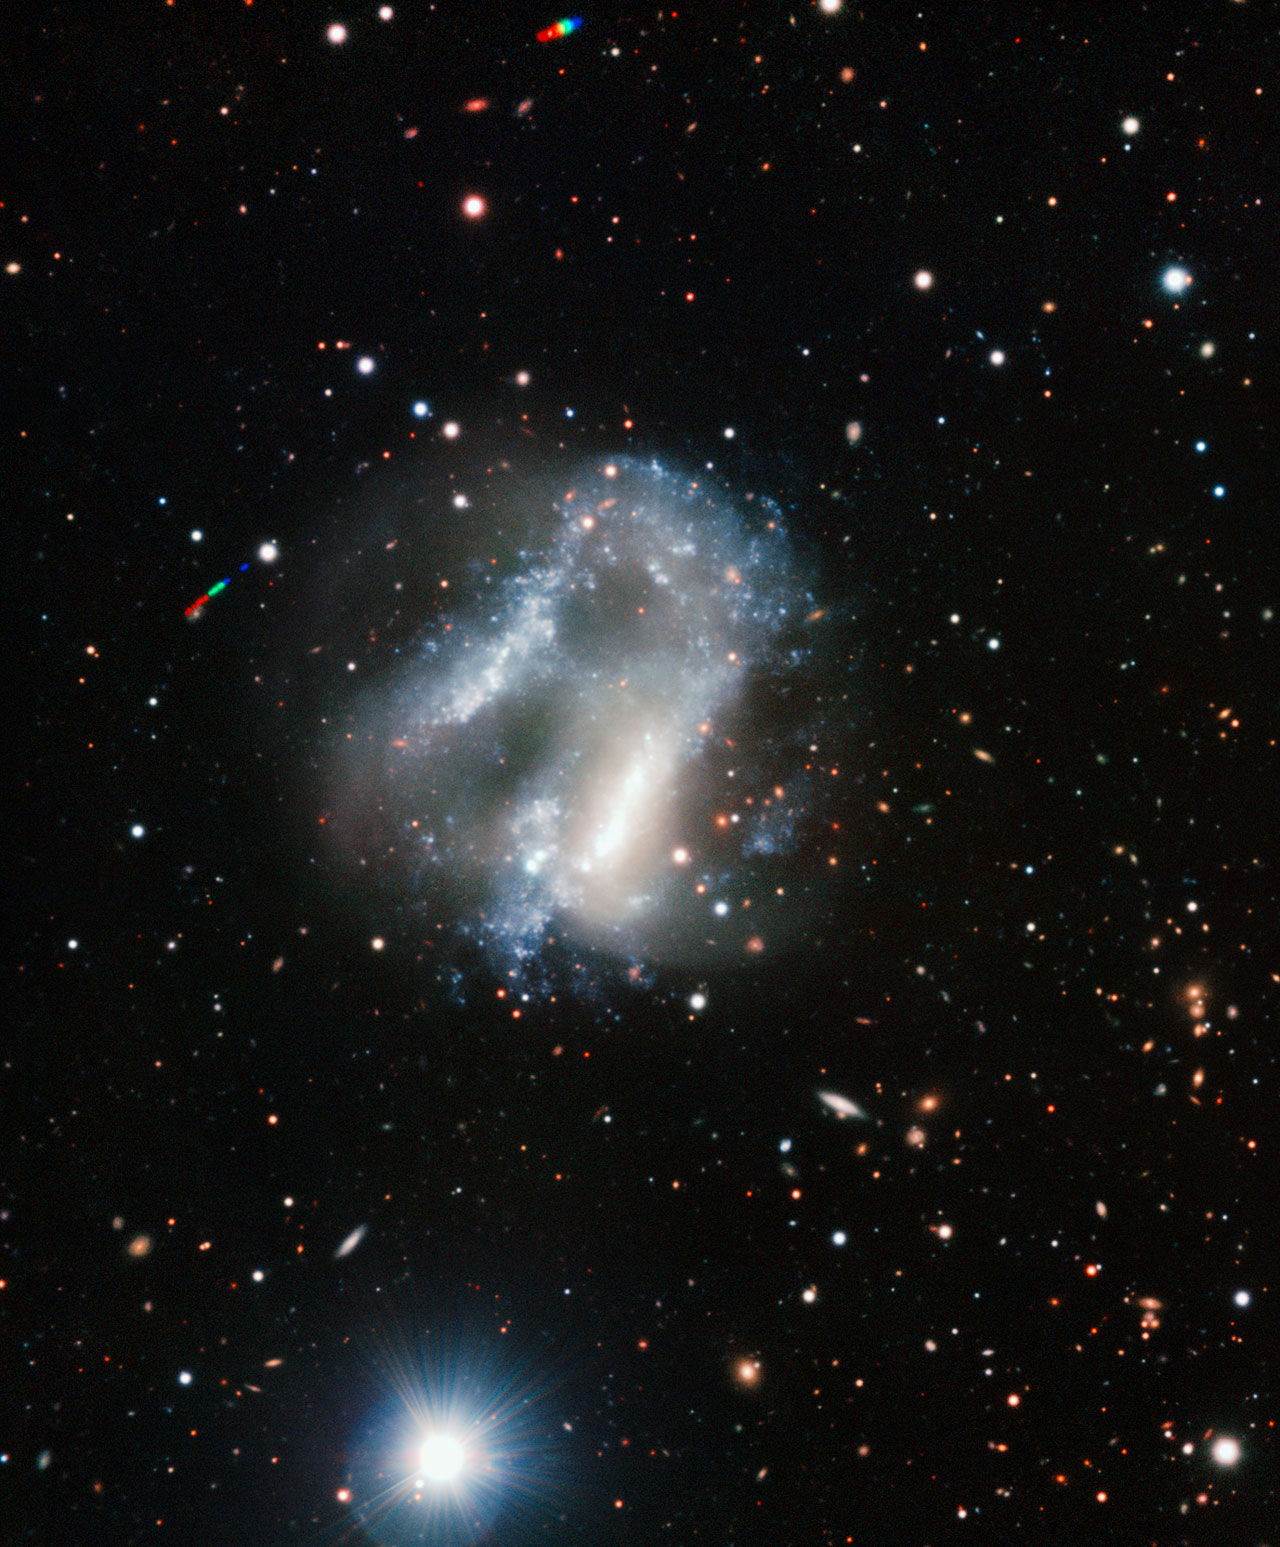 Arp 261 (interacting galaxies)